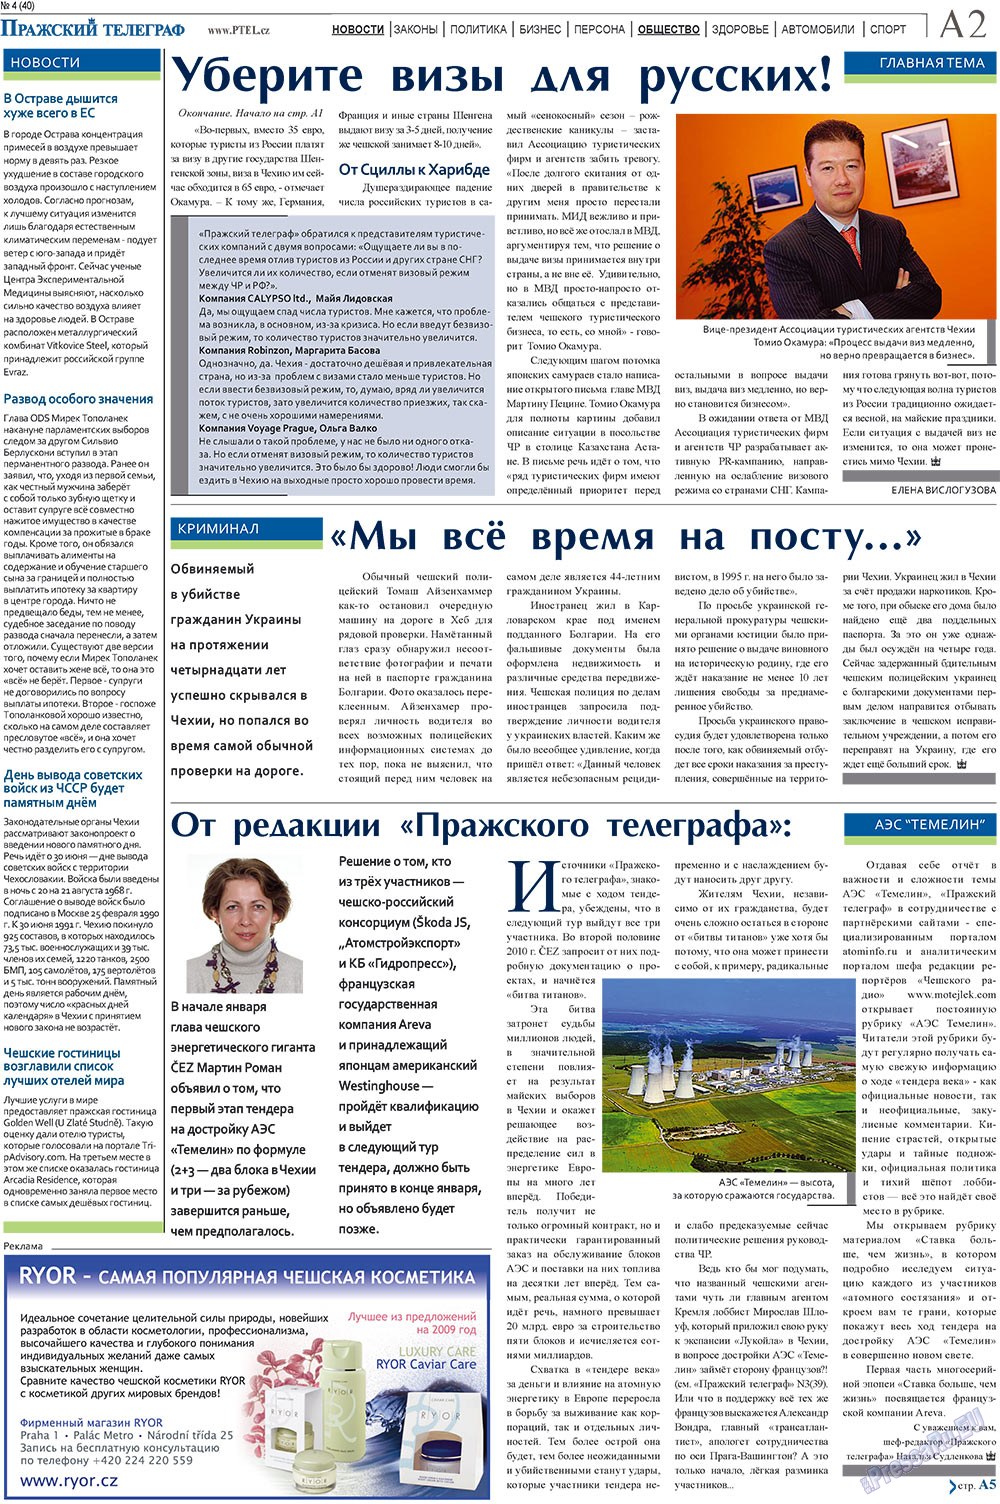 Пражский телеграф, газета. 2010 №4 стр.2